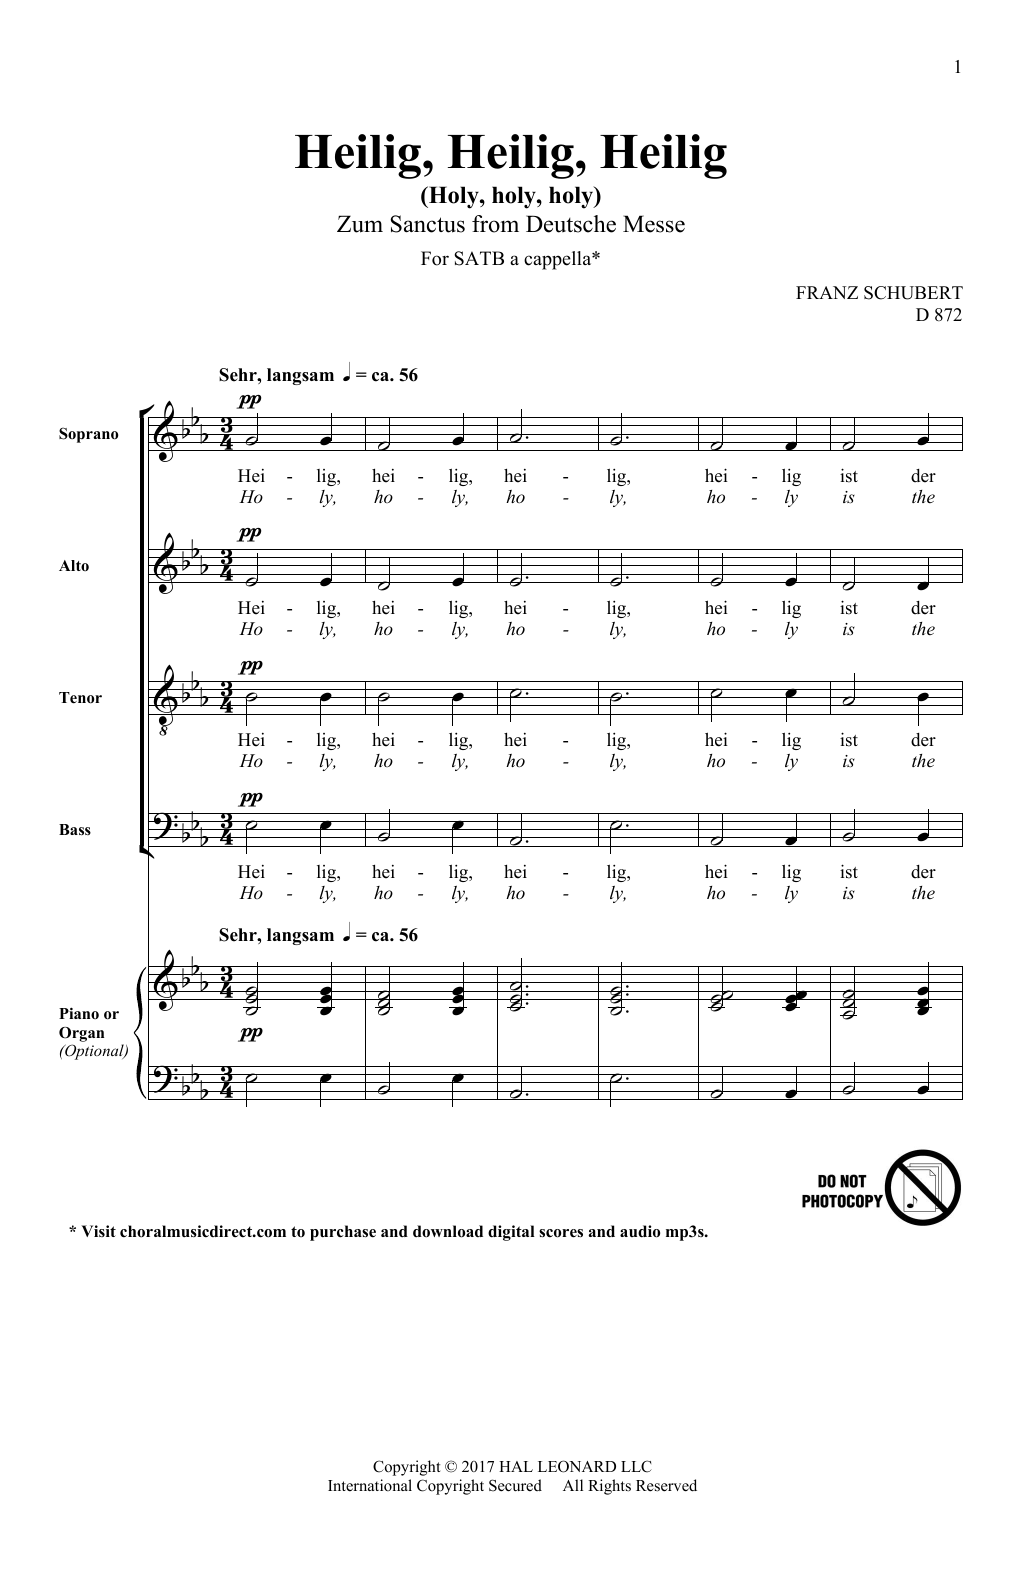 Download Franz Schubert Heilig, Heilig, Heilig (Holy, Holy, Hol Sheet Music